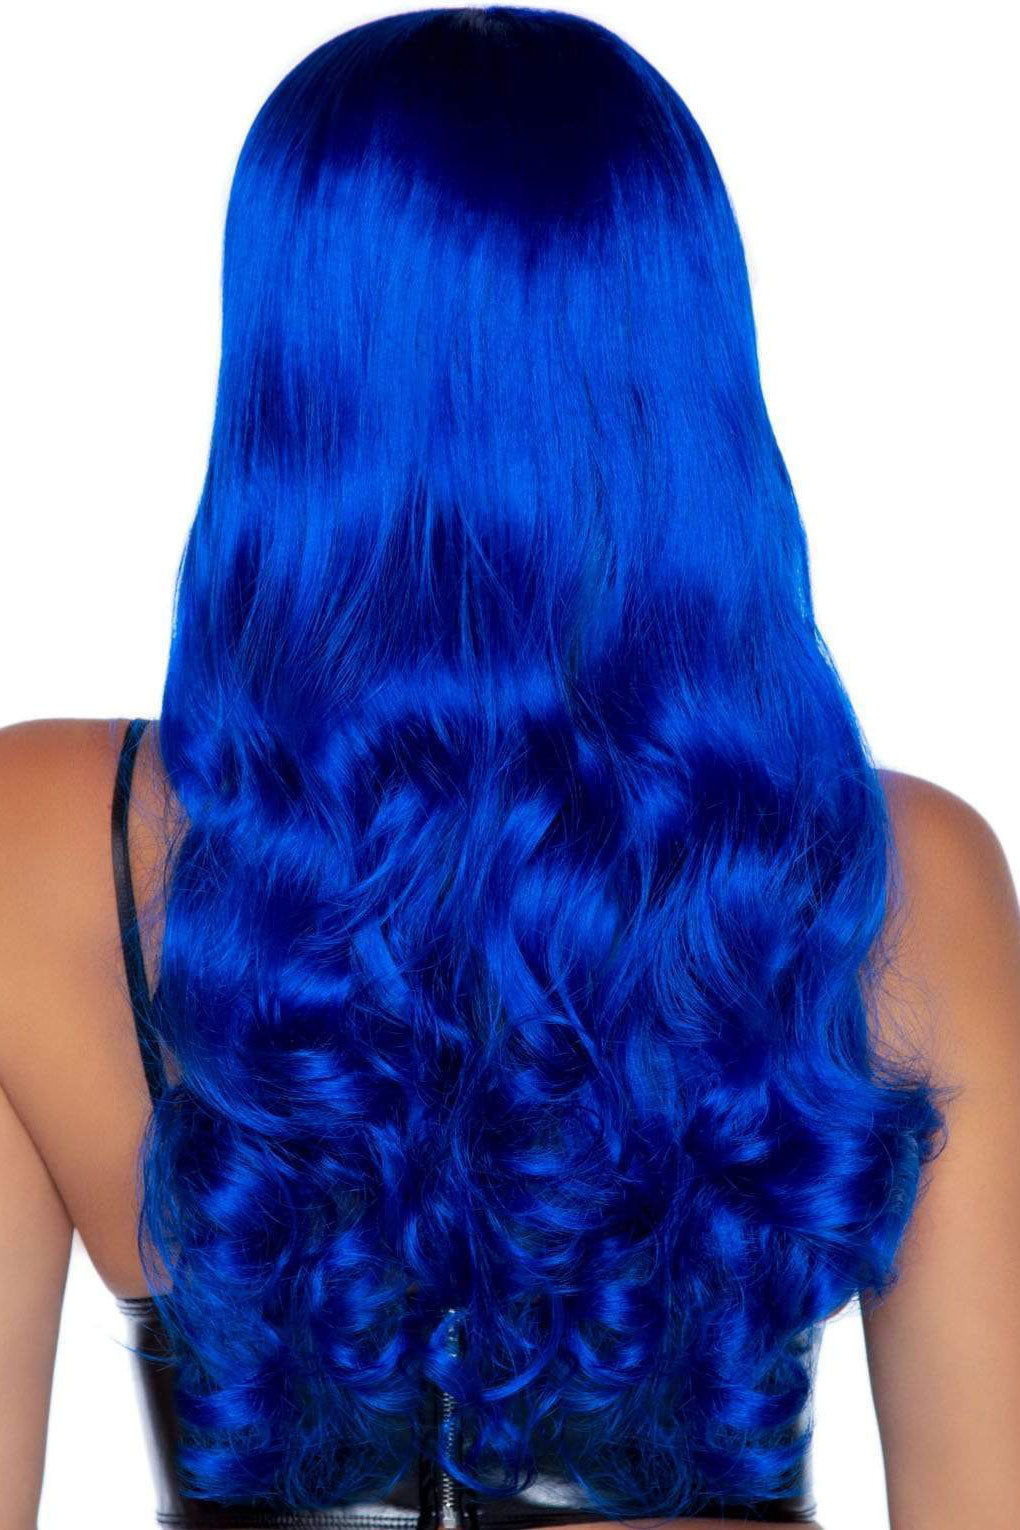 Blue Misfit Wig